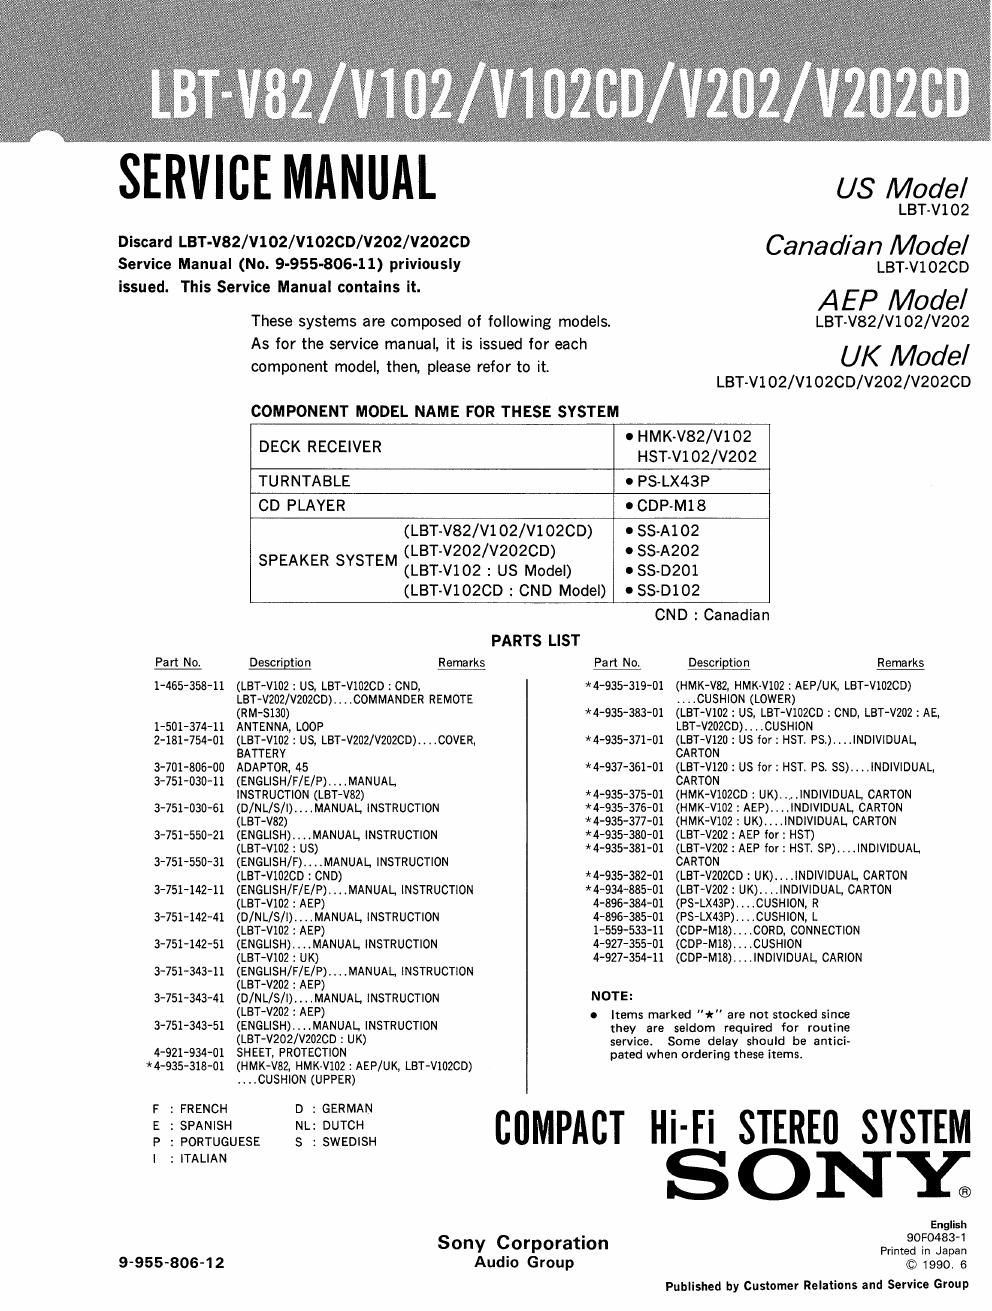 sony lbt v 202 cd service manual